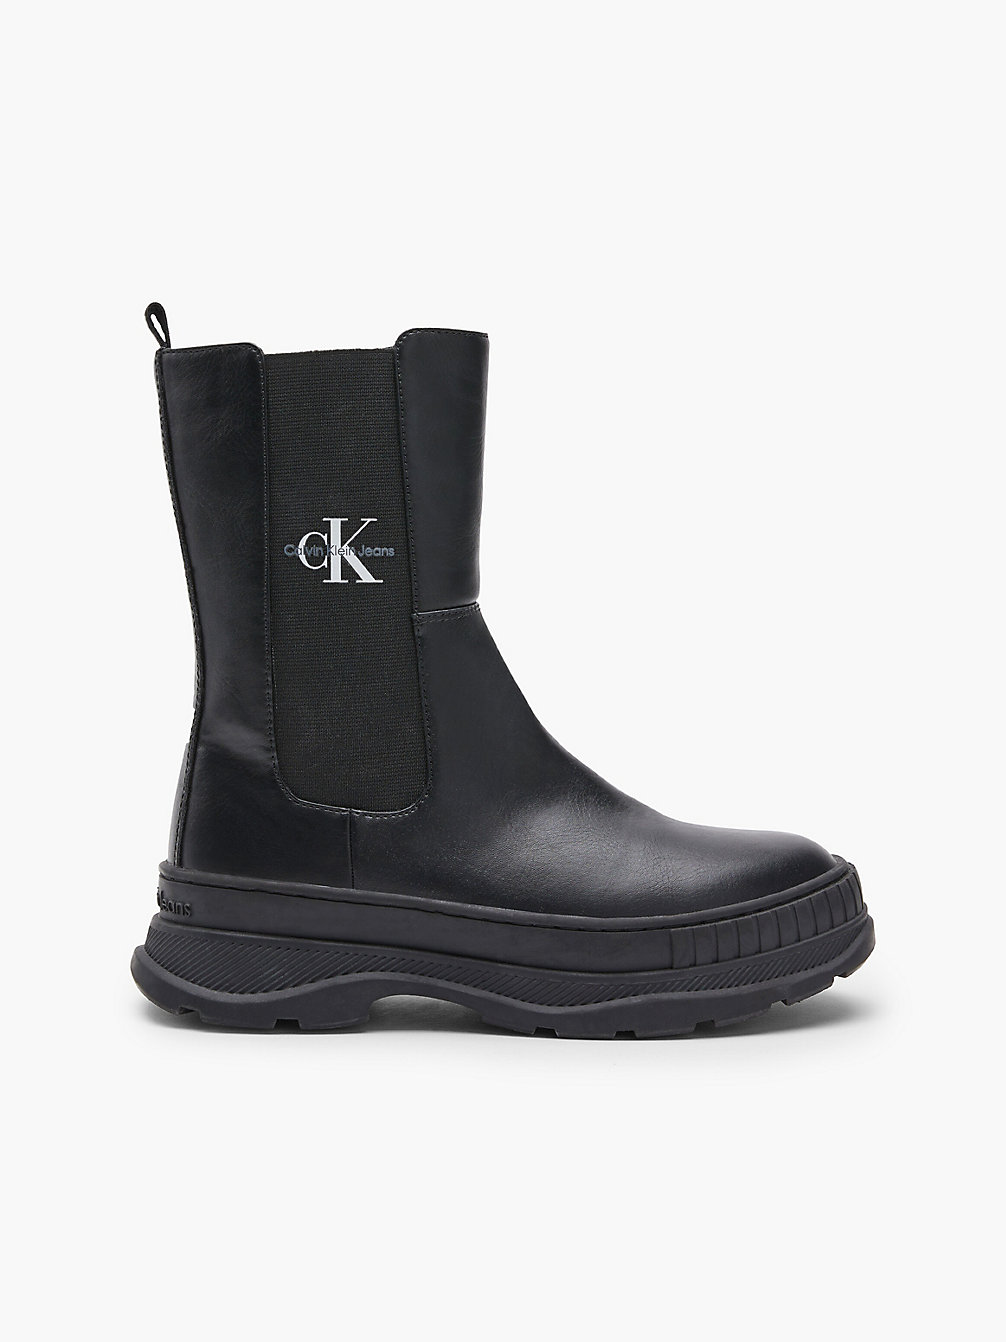 BLACK > Kinder-Chelsea-Boots > undefined kids unisex - Calvin Klein